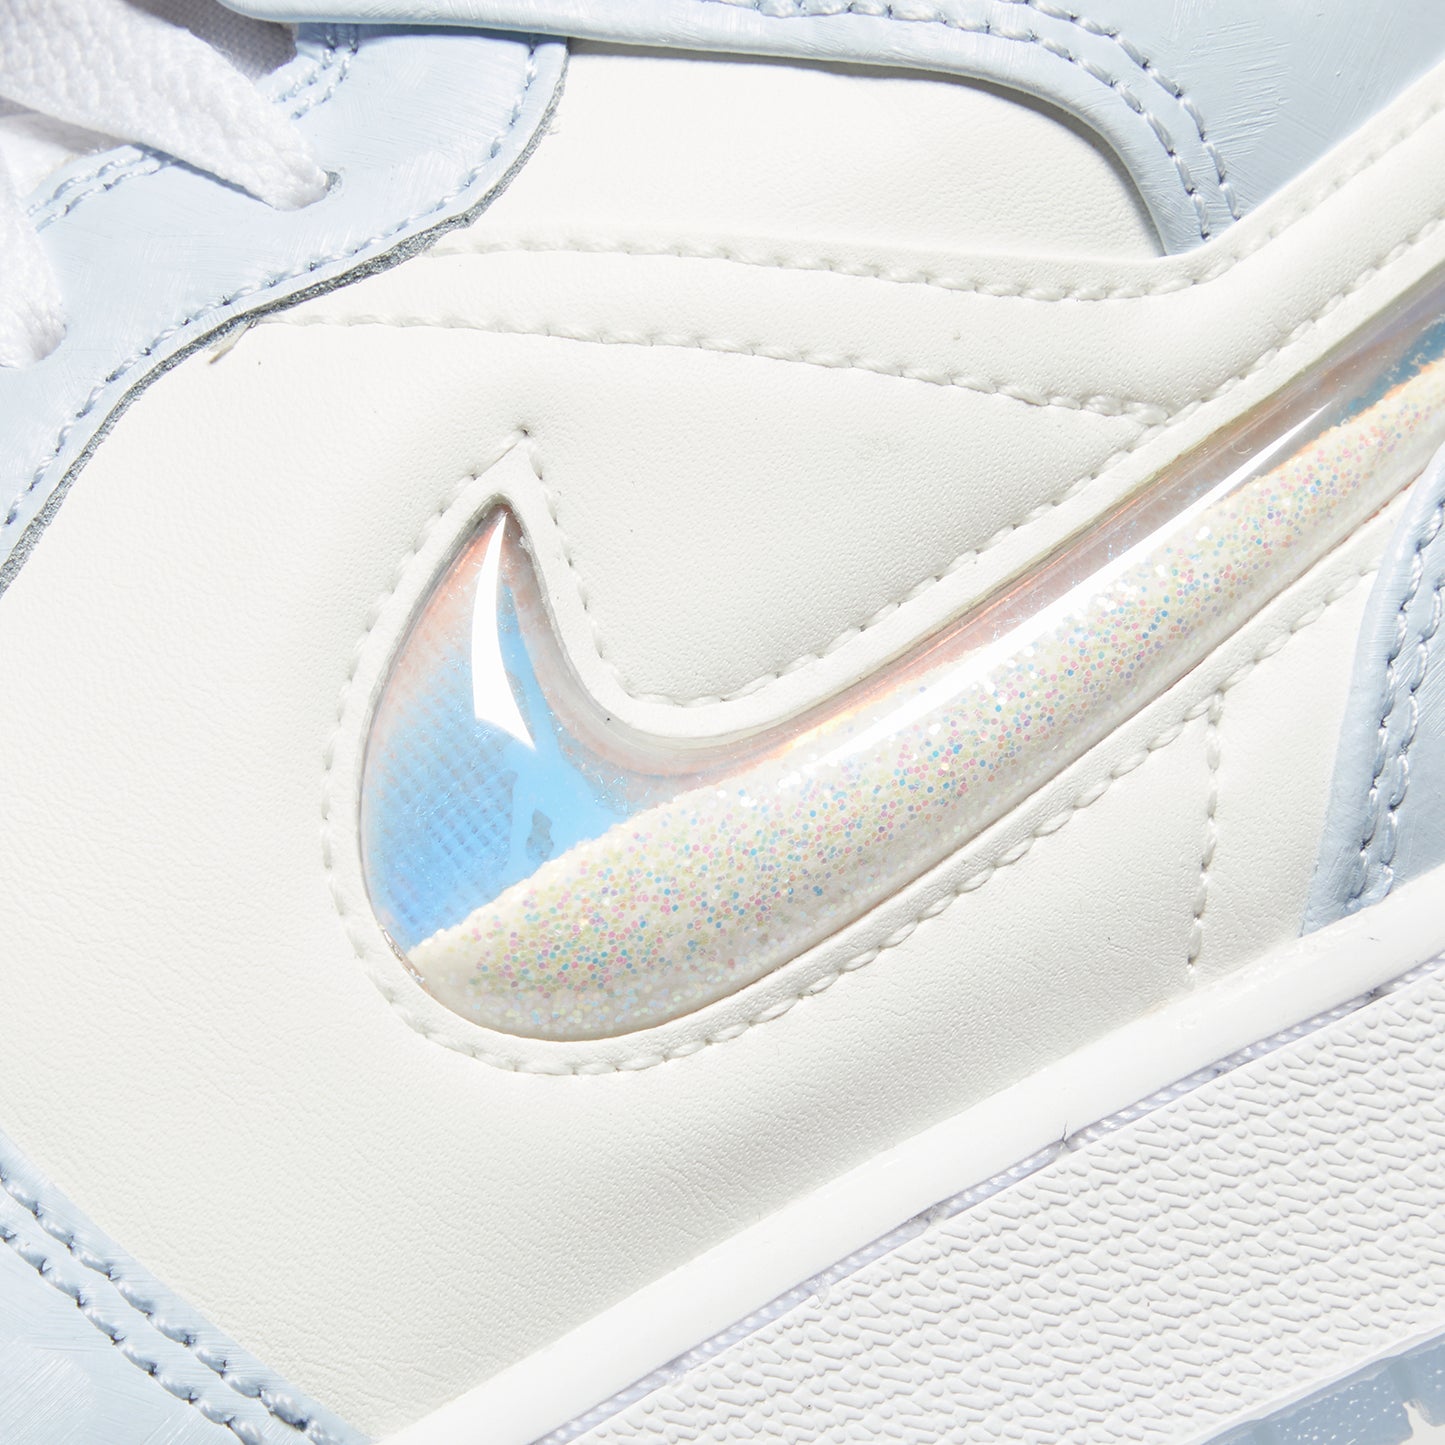 Nike Kids Air Jordan 1 Mid SE (Blue Tint/Ice Blue/Summit White/White)